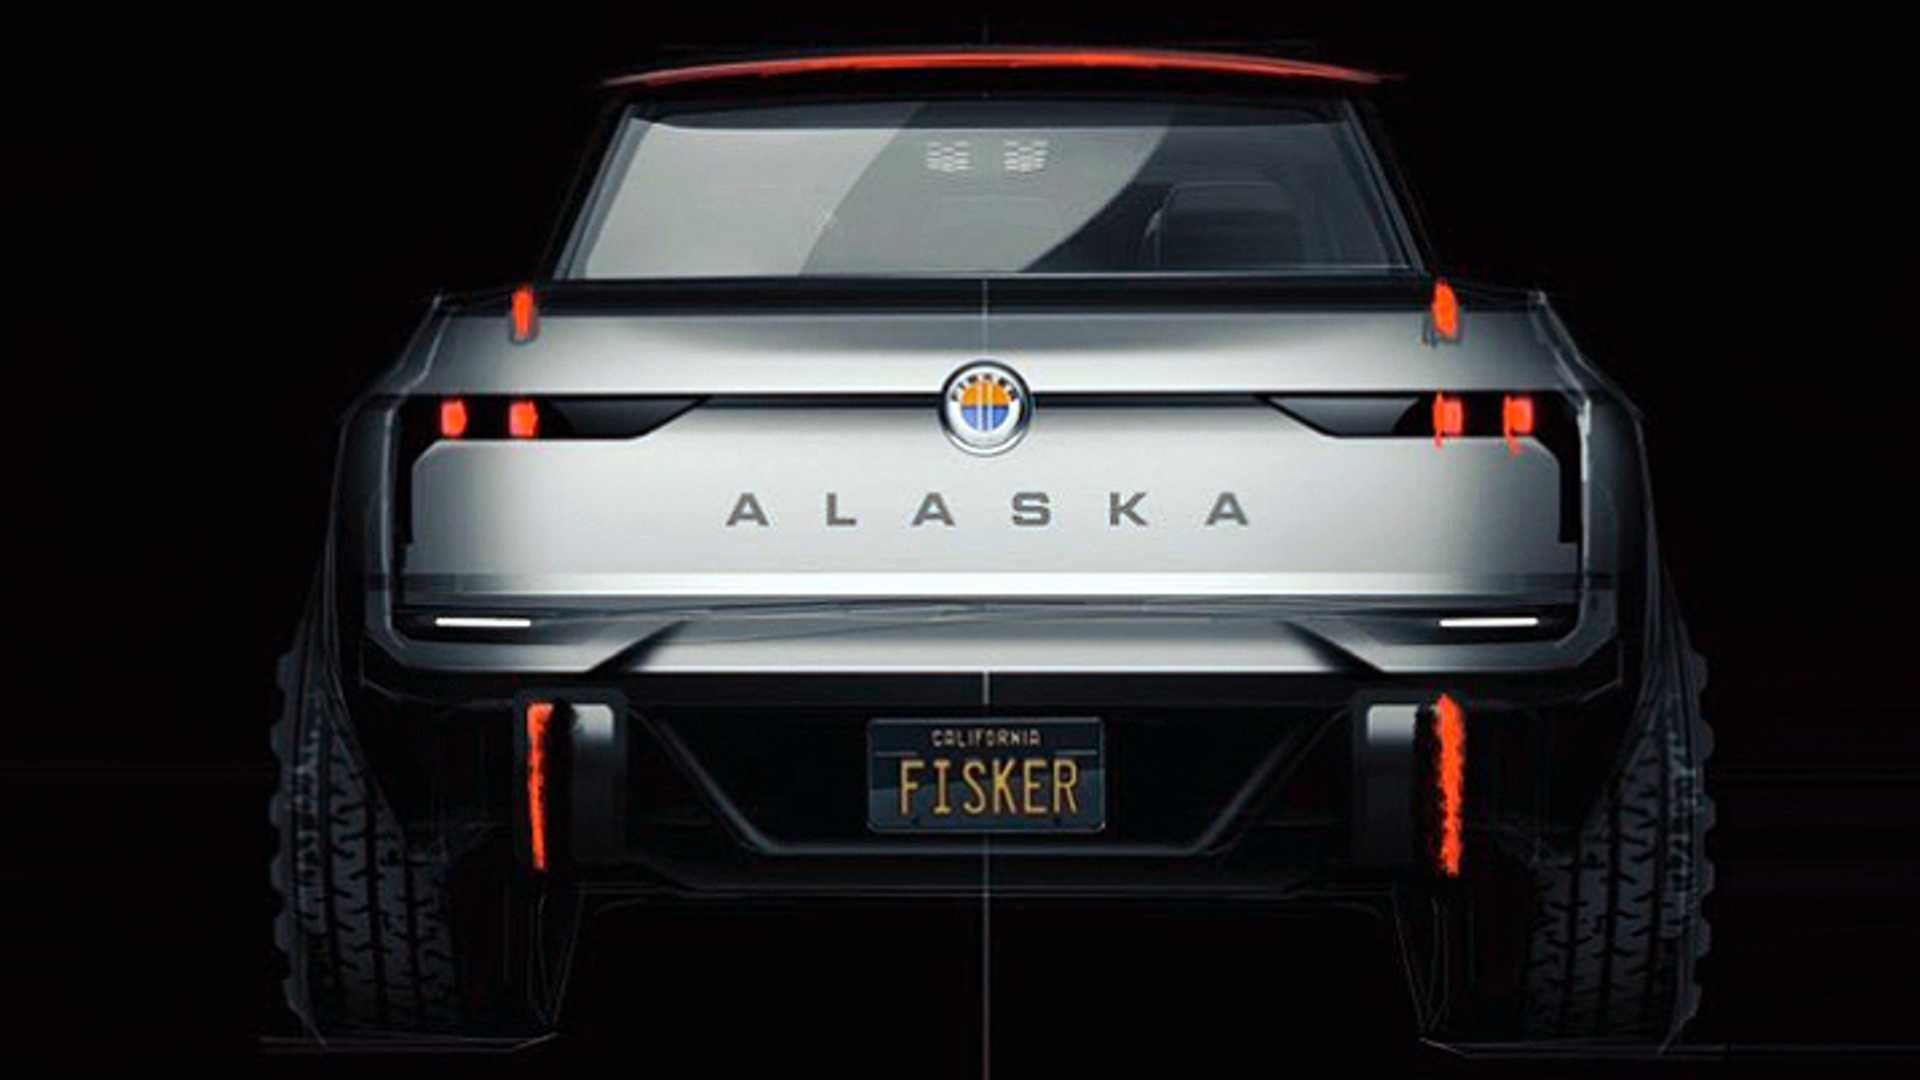 The rear profile of the Fisker Alaska Truck, visualised